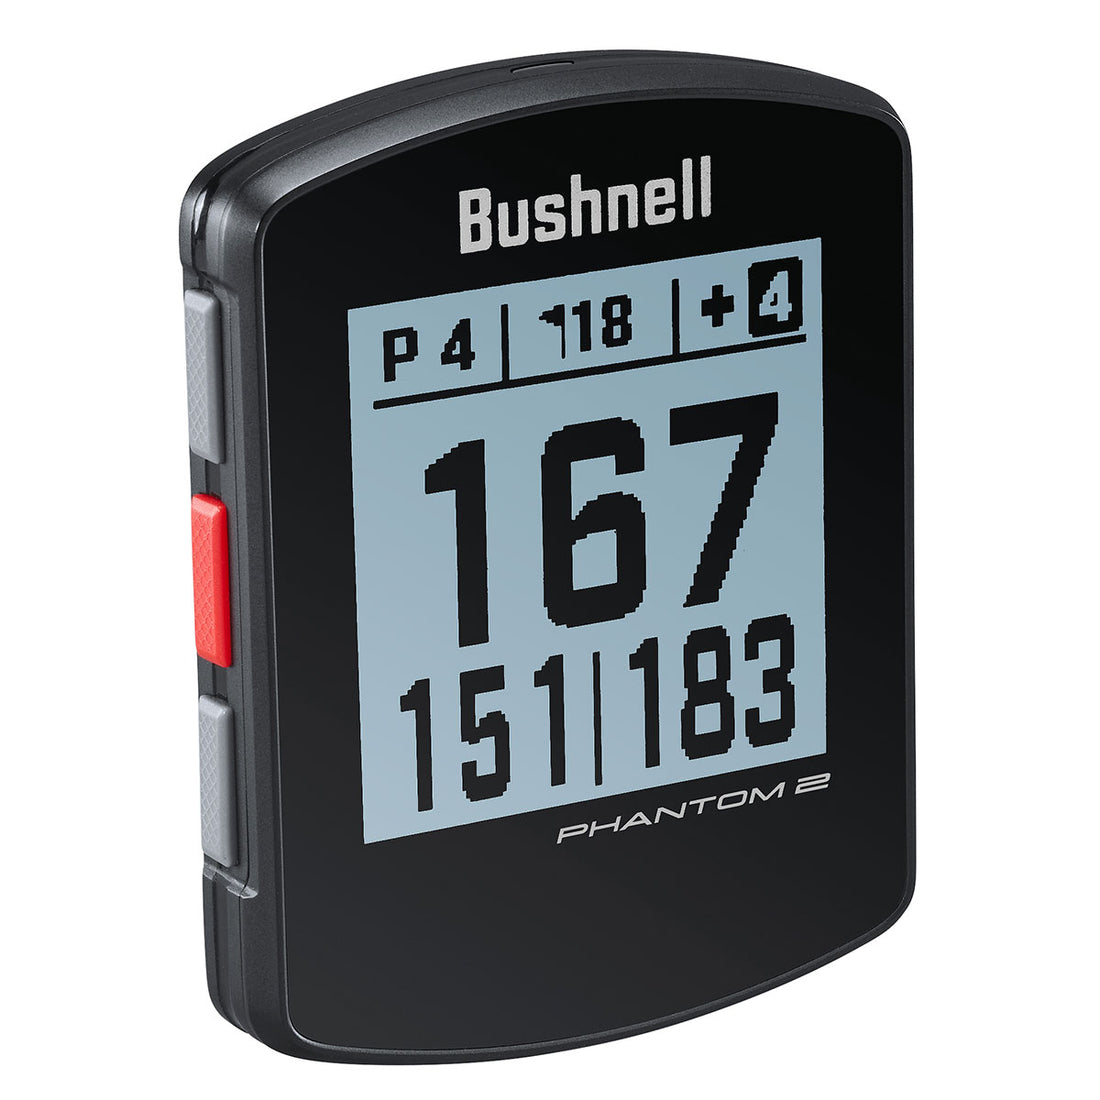 Bushnell Phantom 2 Handheld GPS